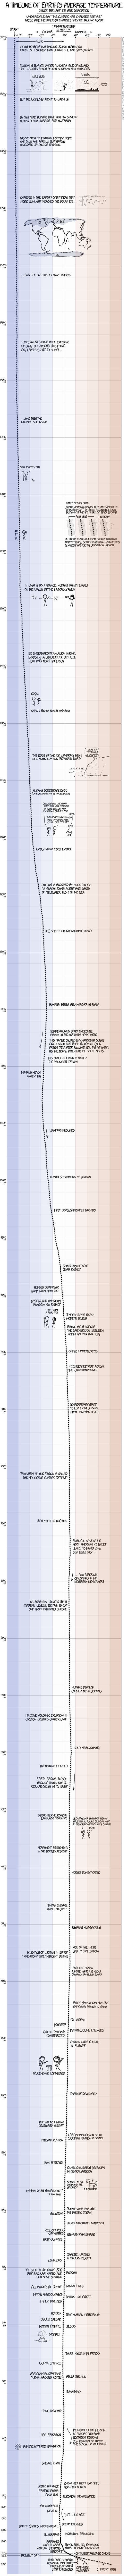 1732: Earth Temperature Timeline - explain xkcd